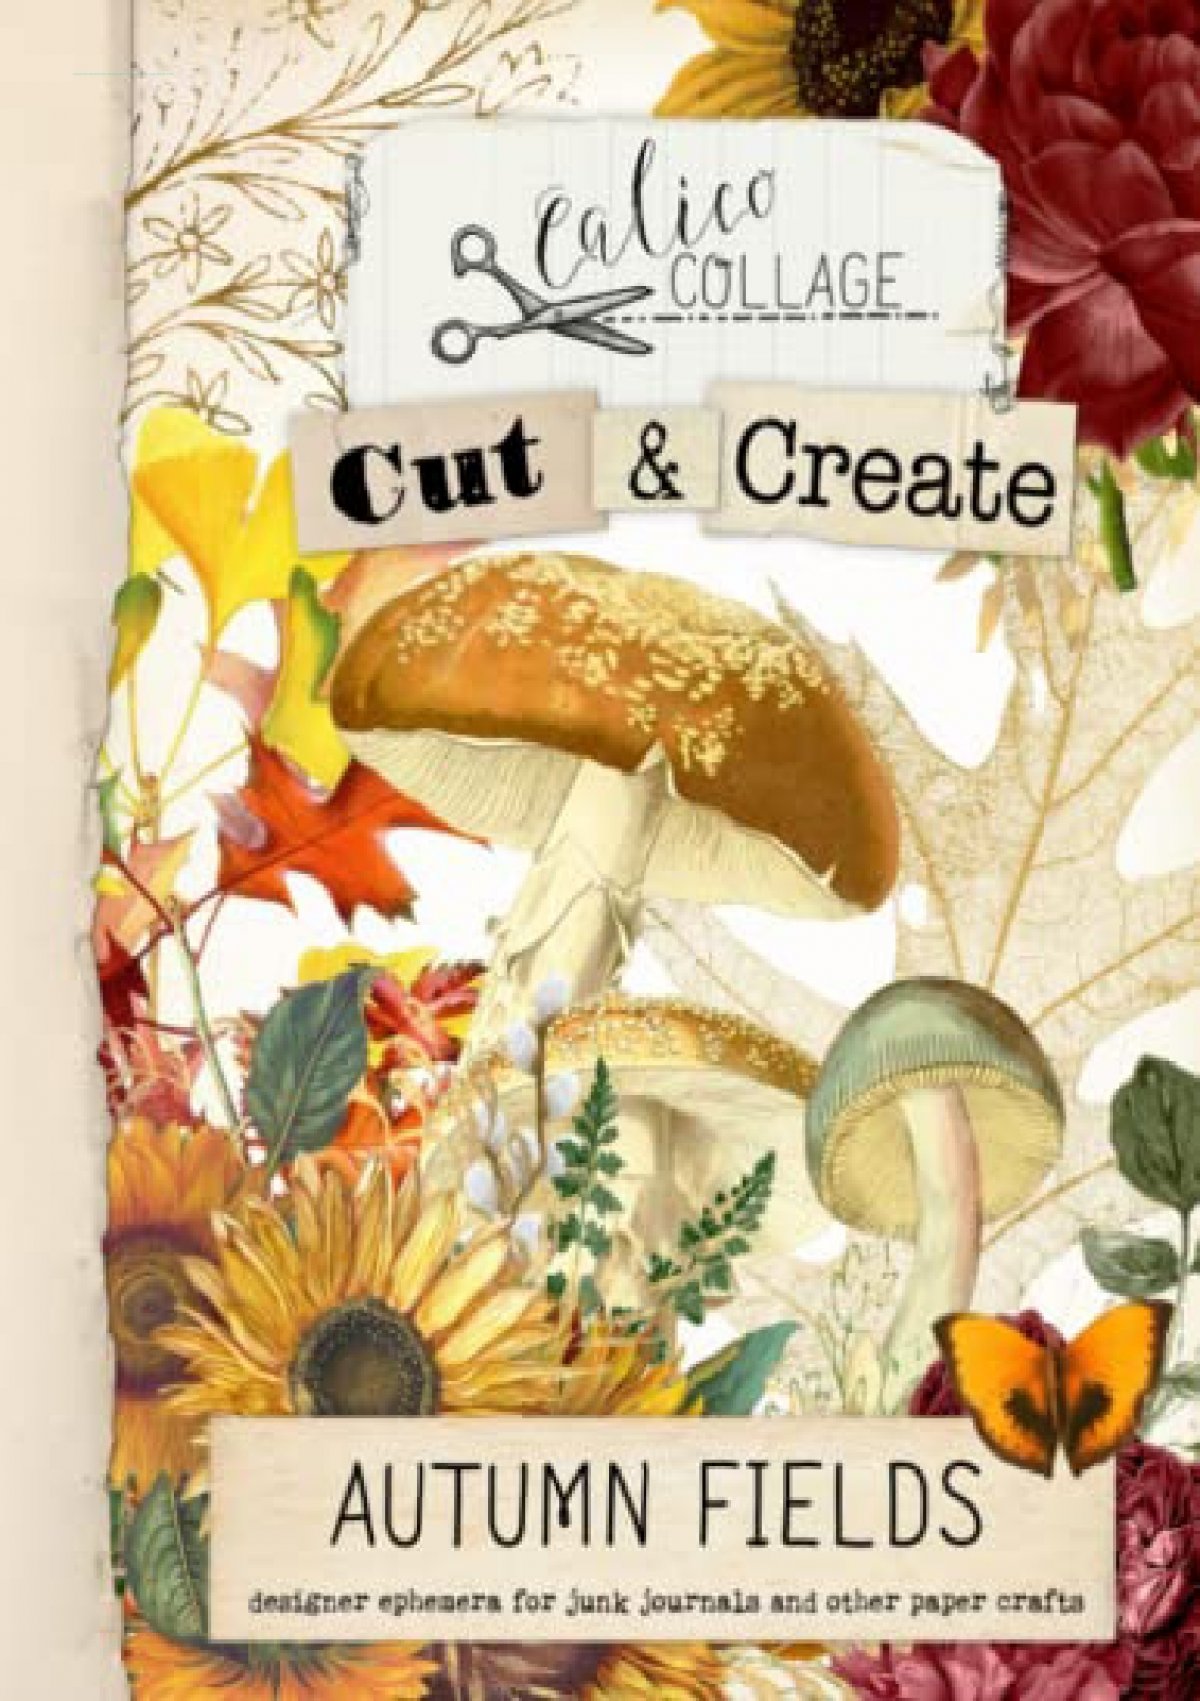 Cut & Create Ephemera Books By Calico Collage